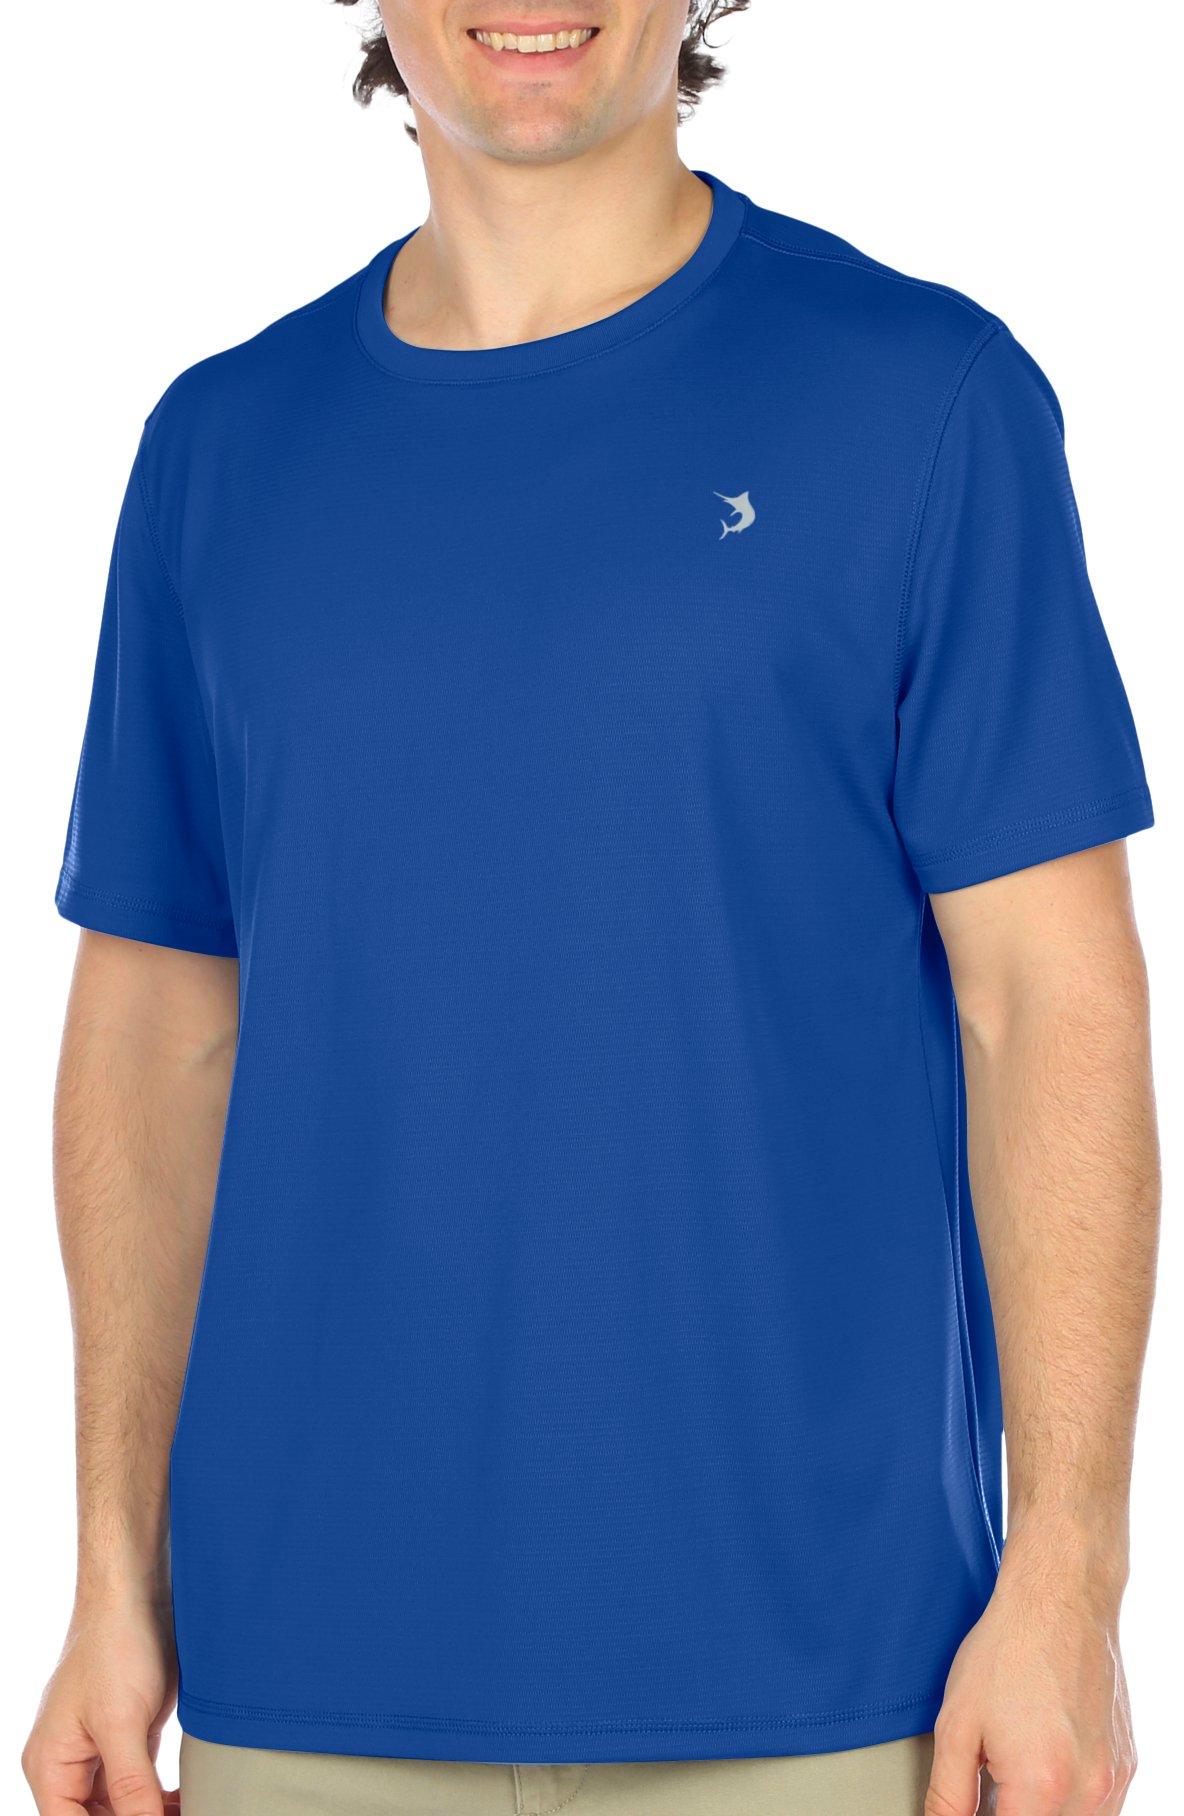 Reel Legends Mens Short Sleeve Snook T-Shirt - Blue/White - Large